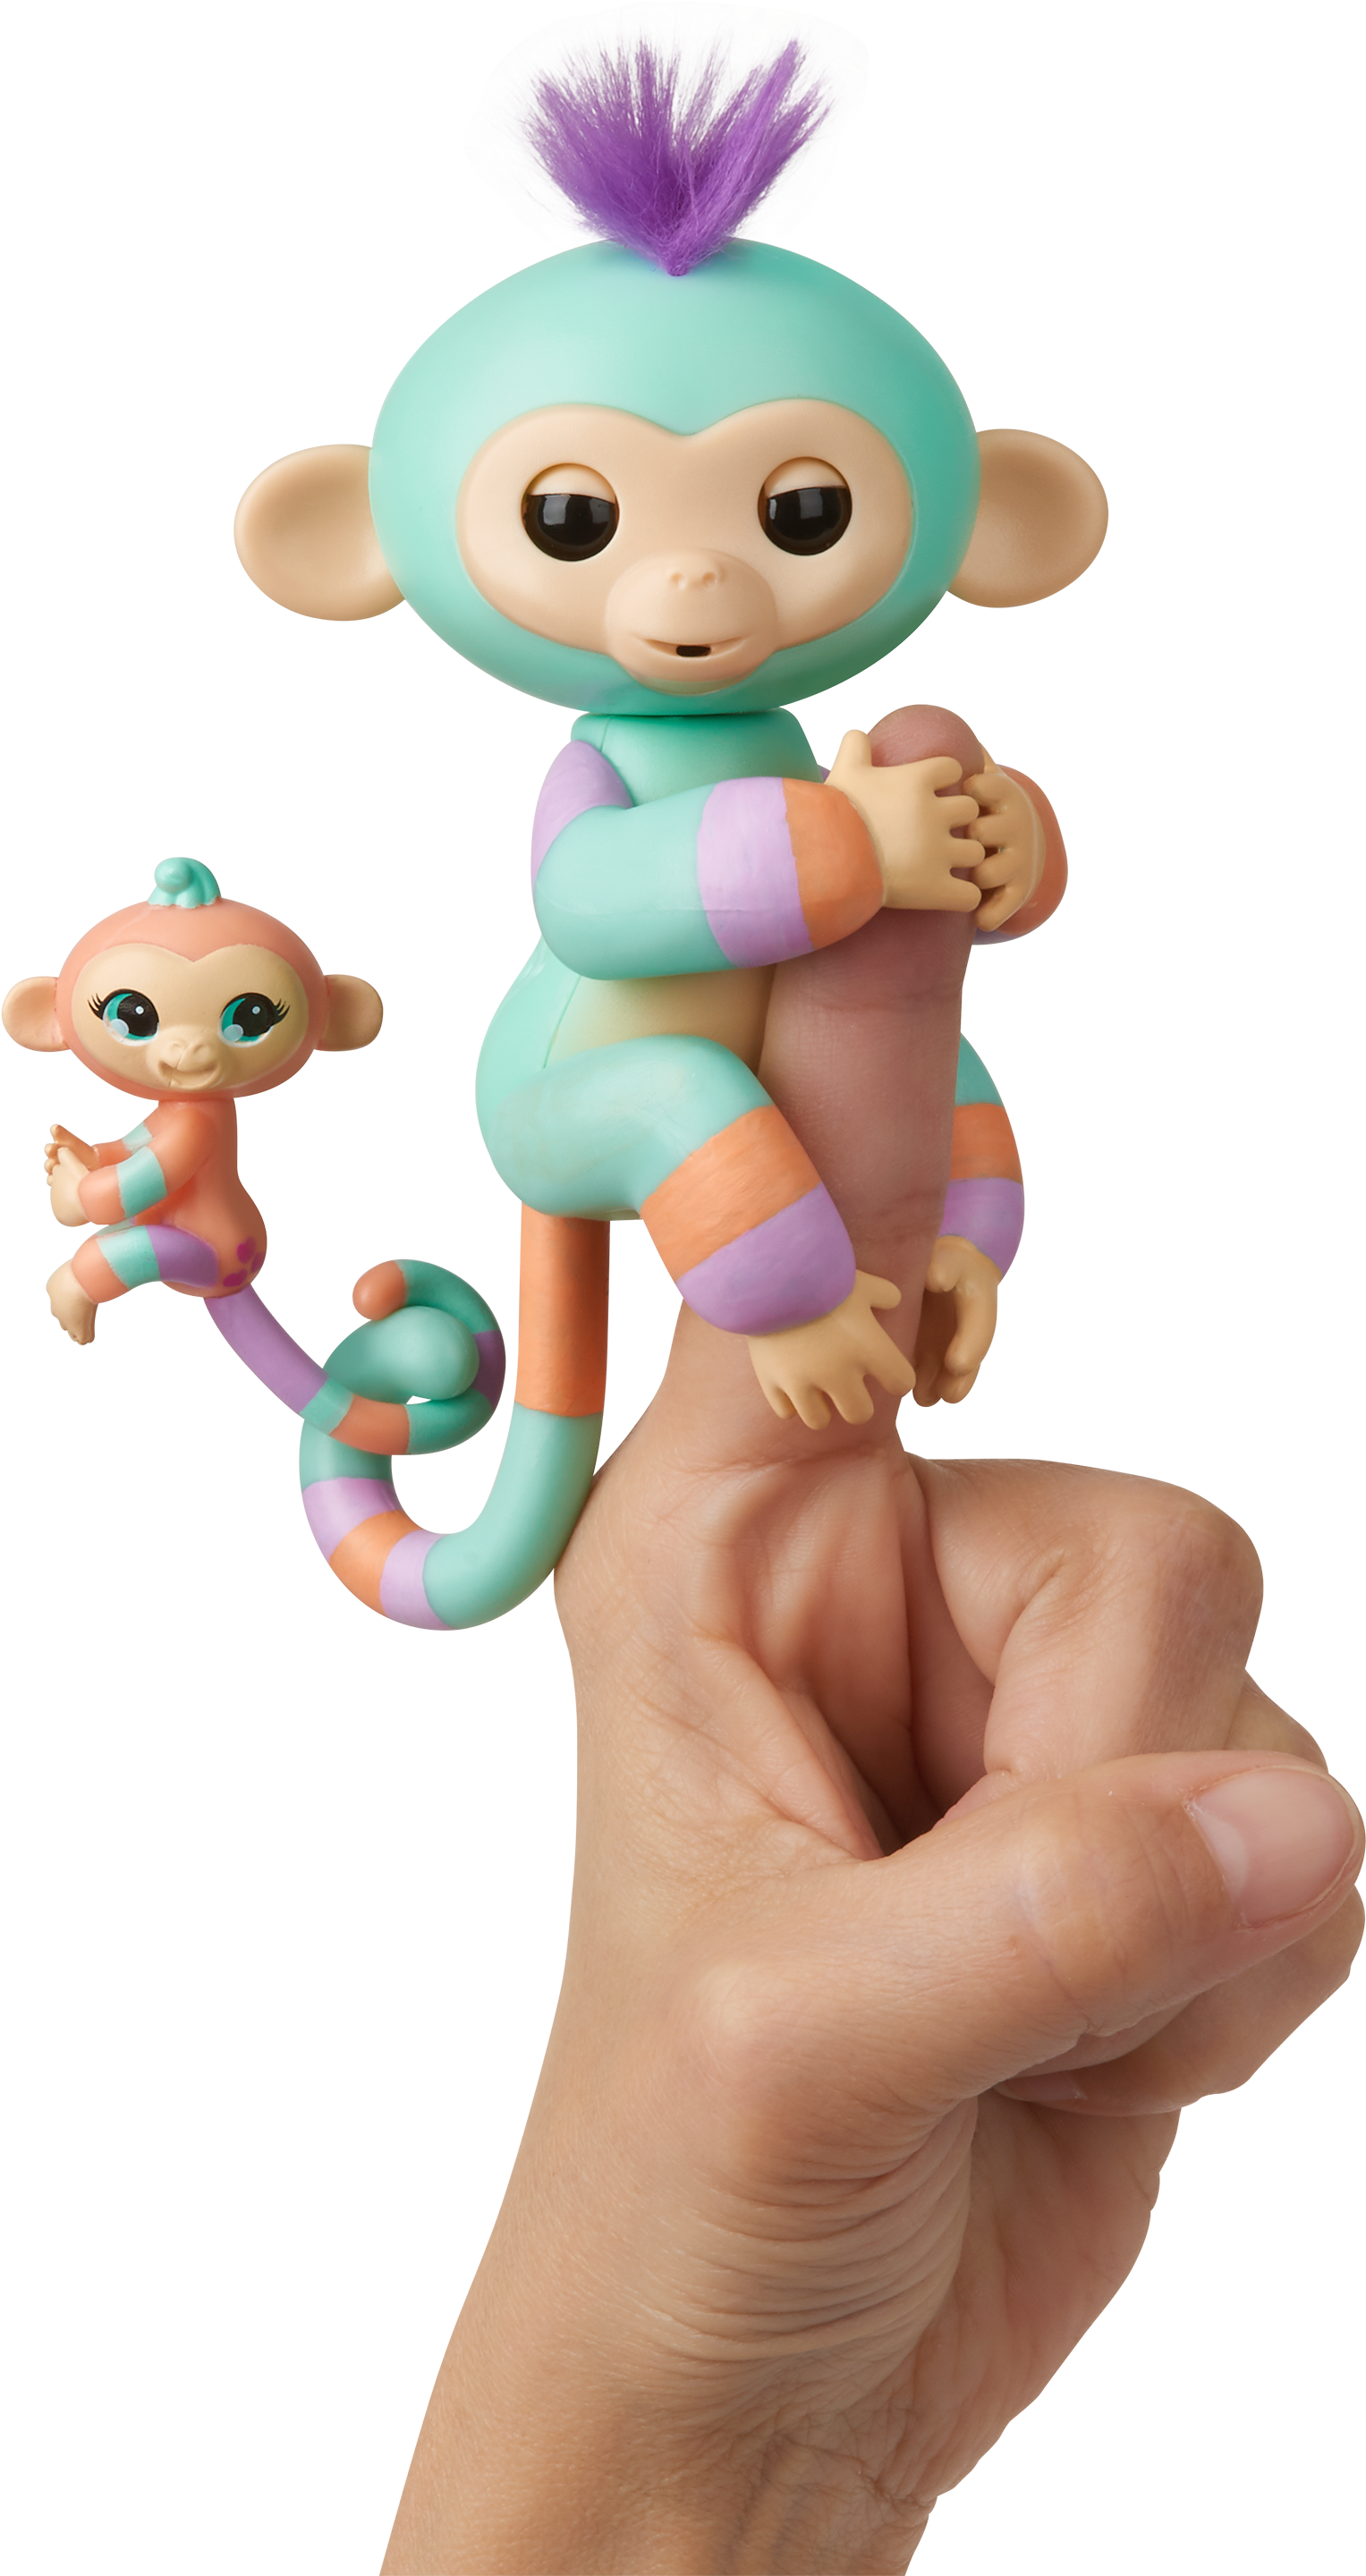 Colorful Toy Monkeyson Finger PNG